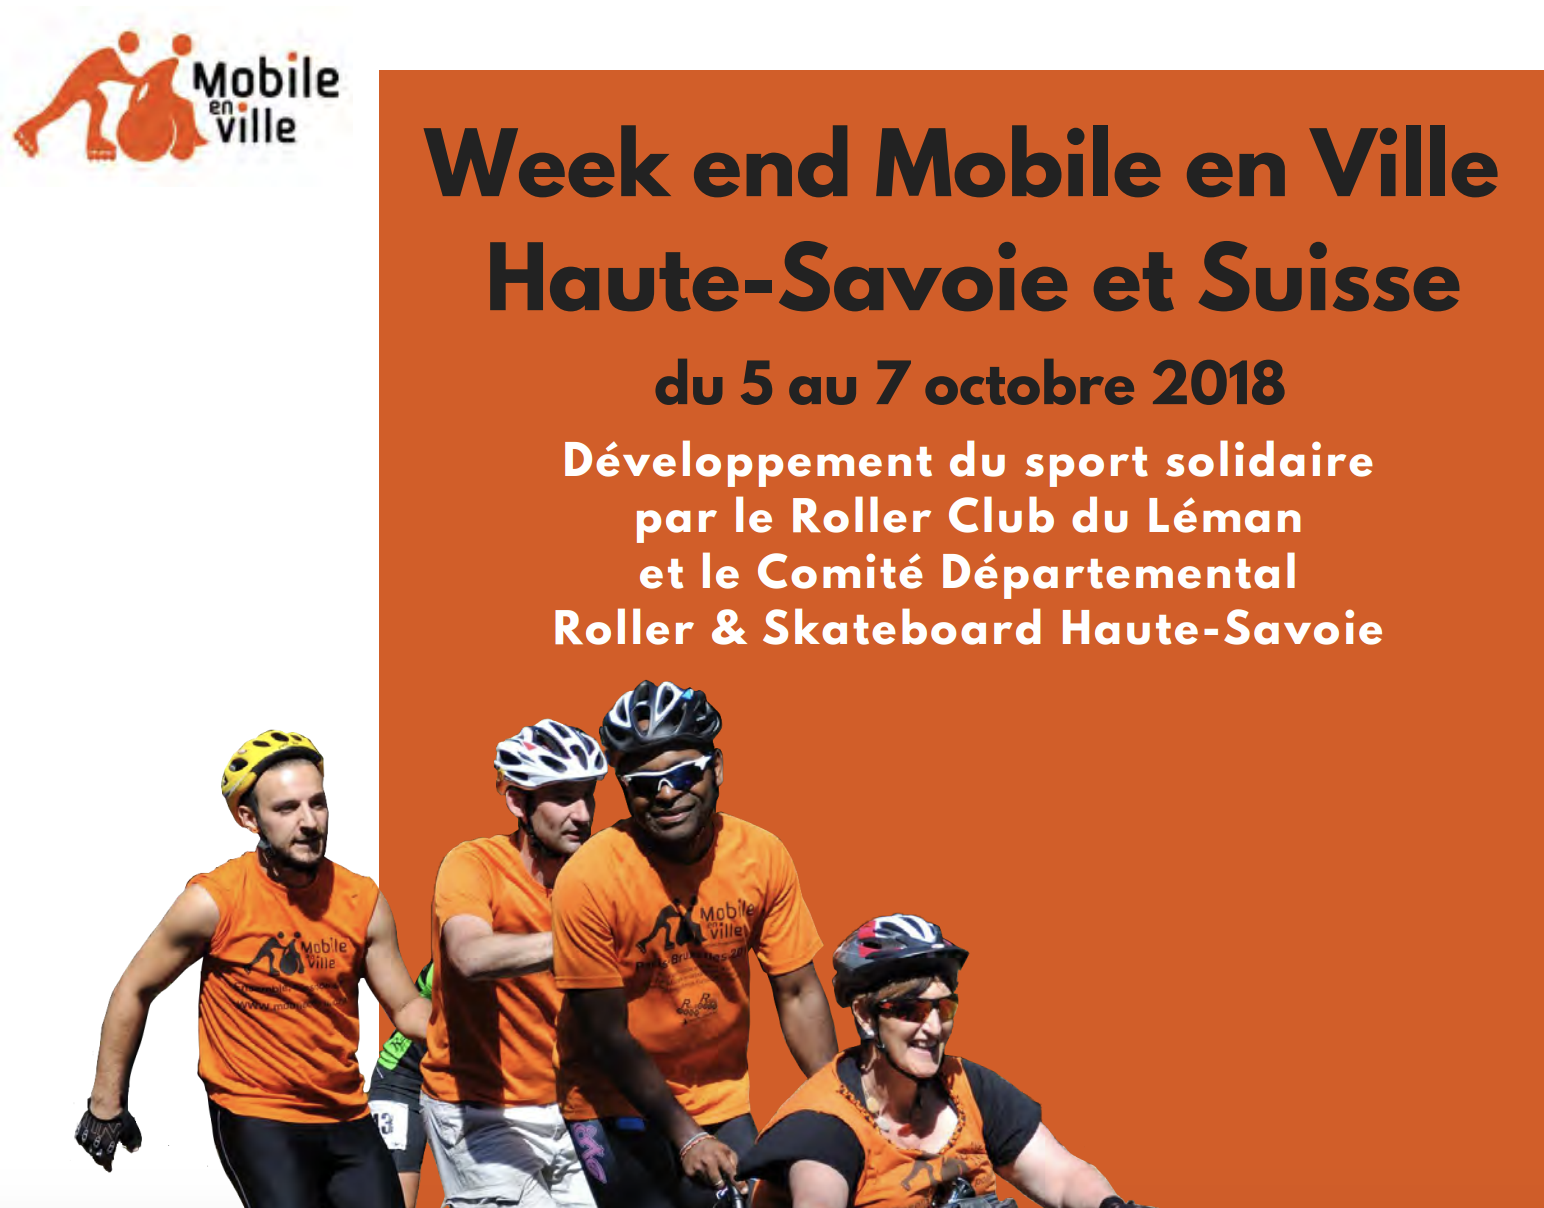 Weekend mobile en ville Haute-Savoie